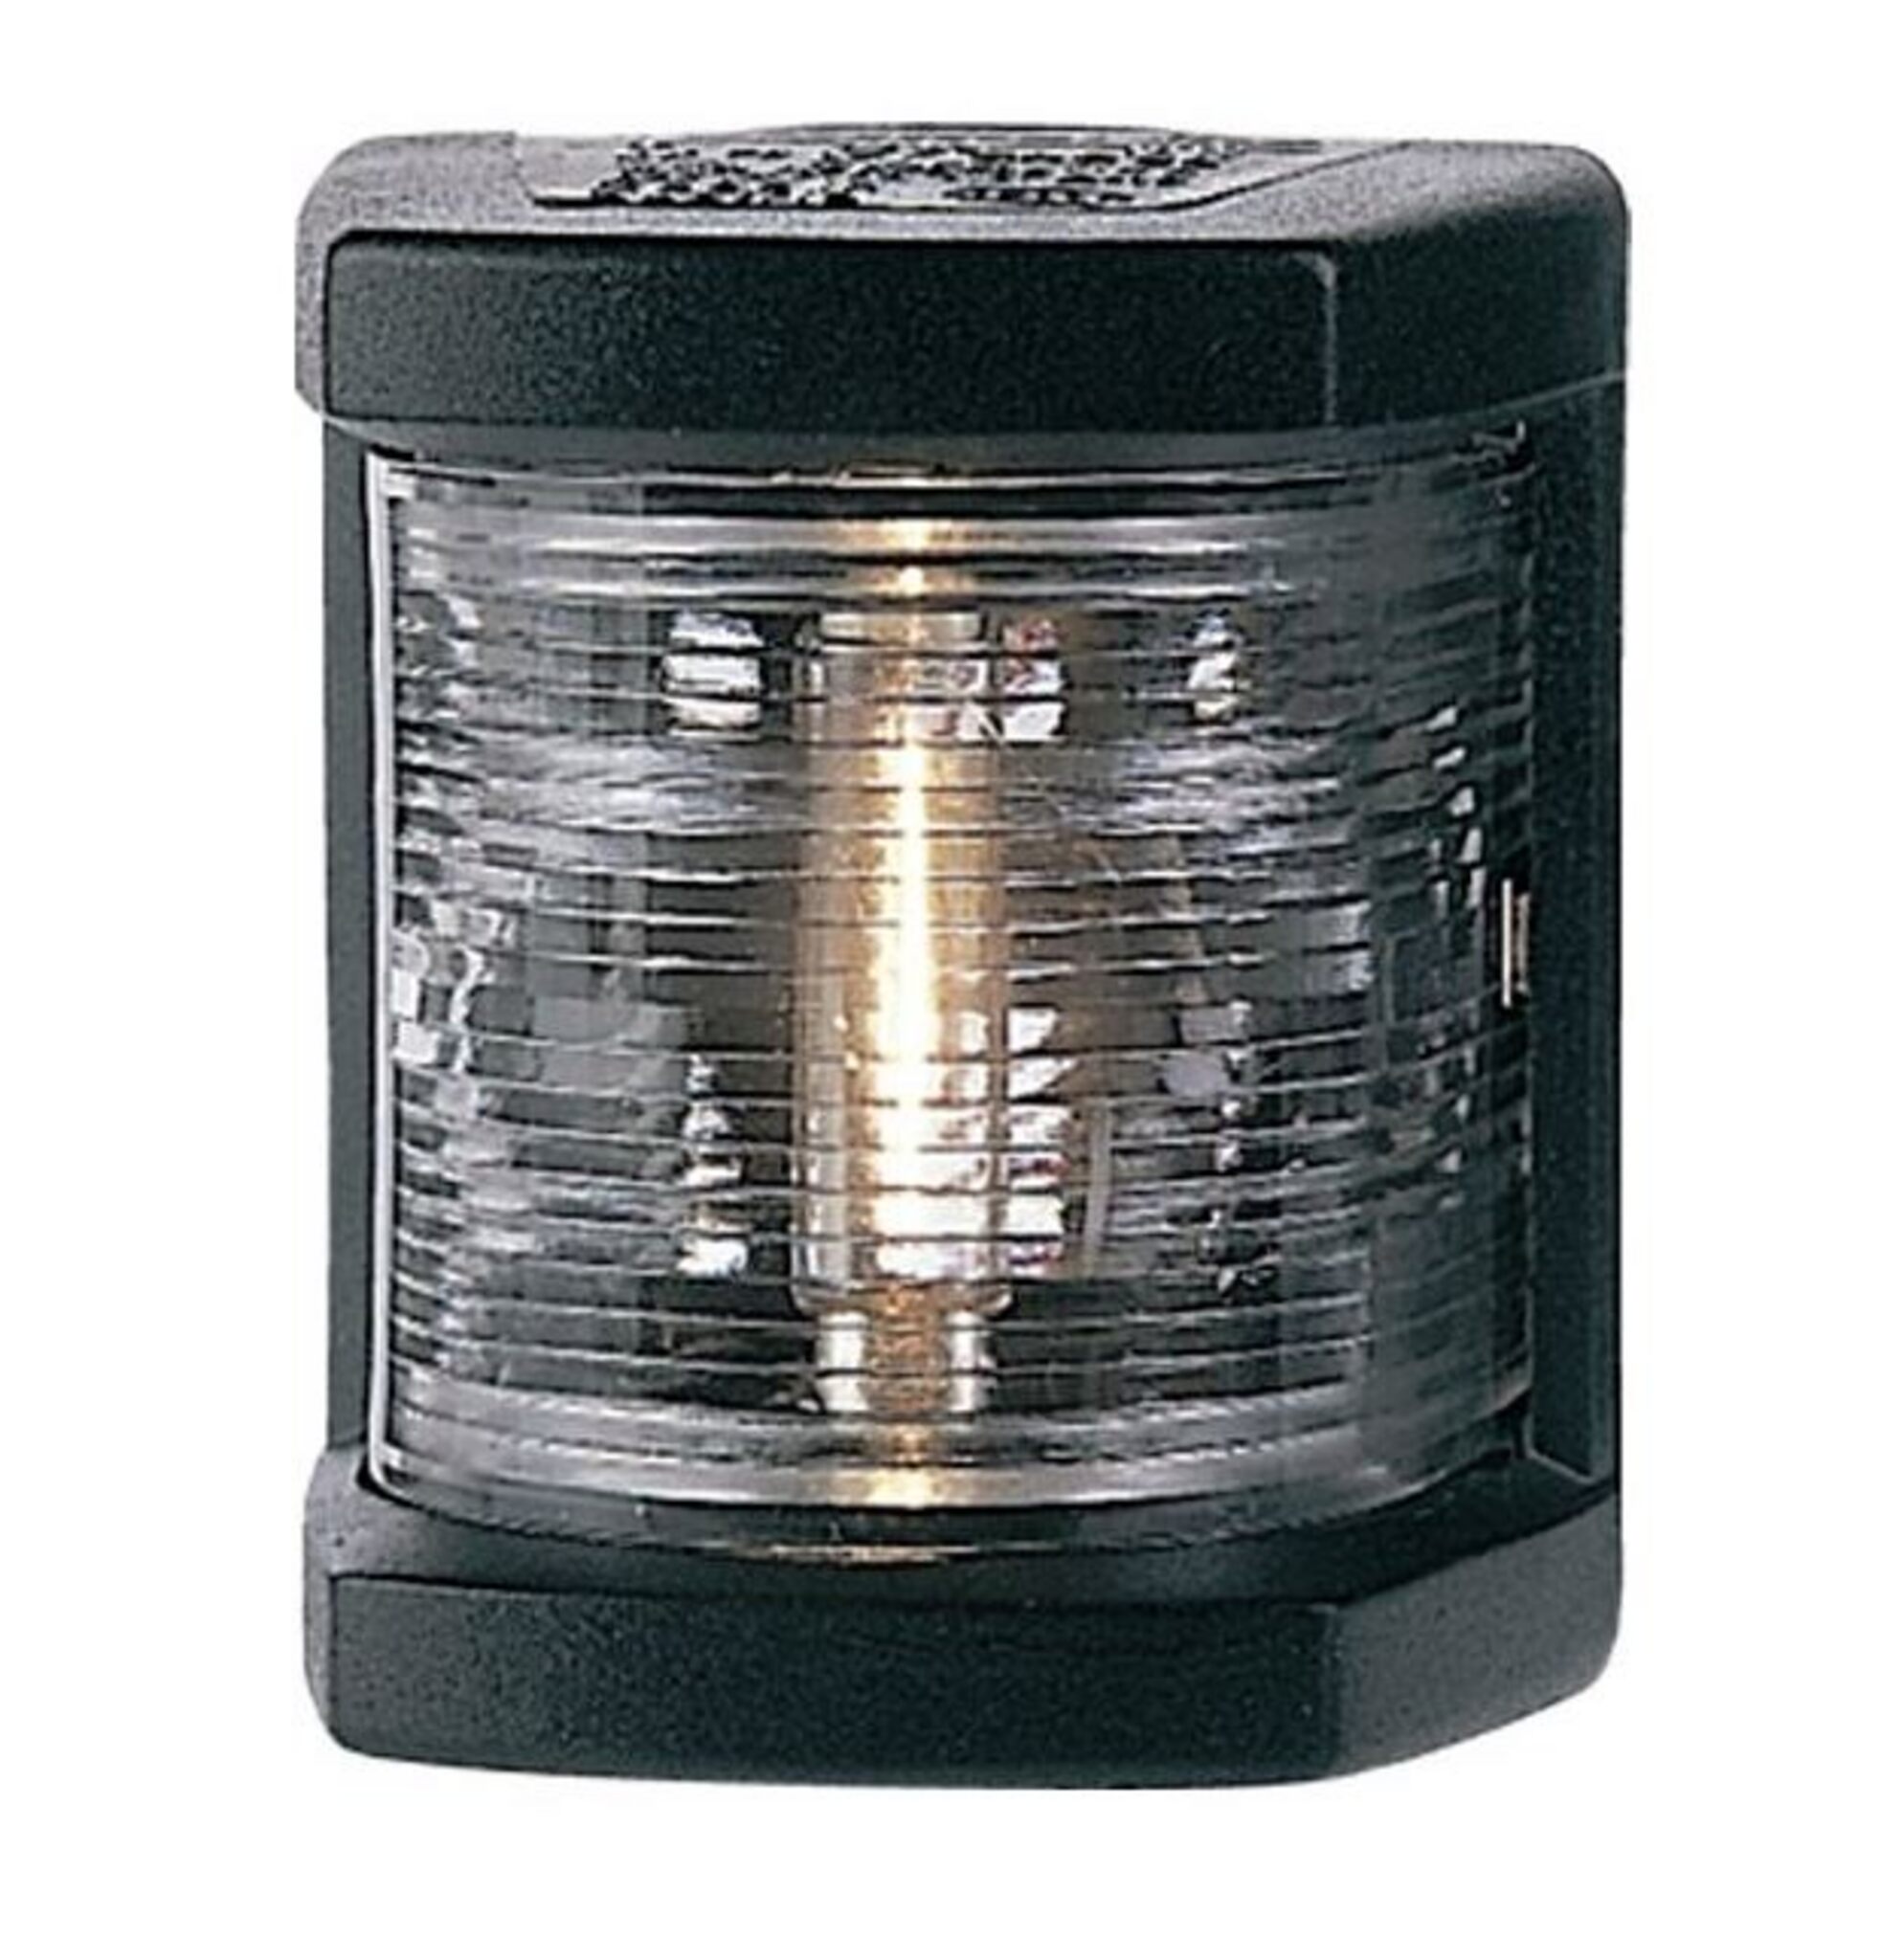 Hella Marine Stern Lantern Series 3652 with black housing